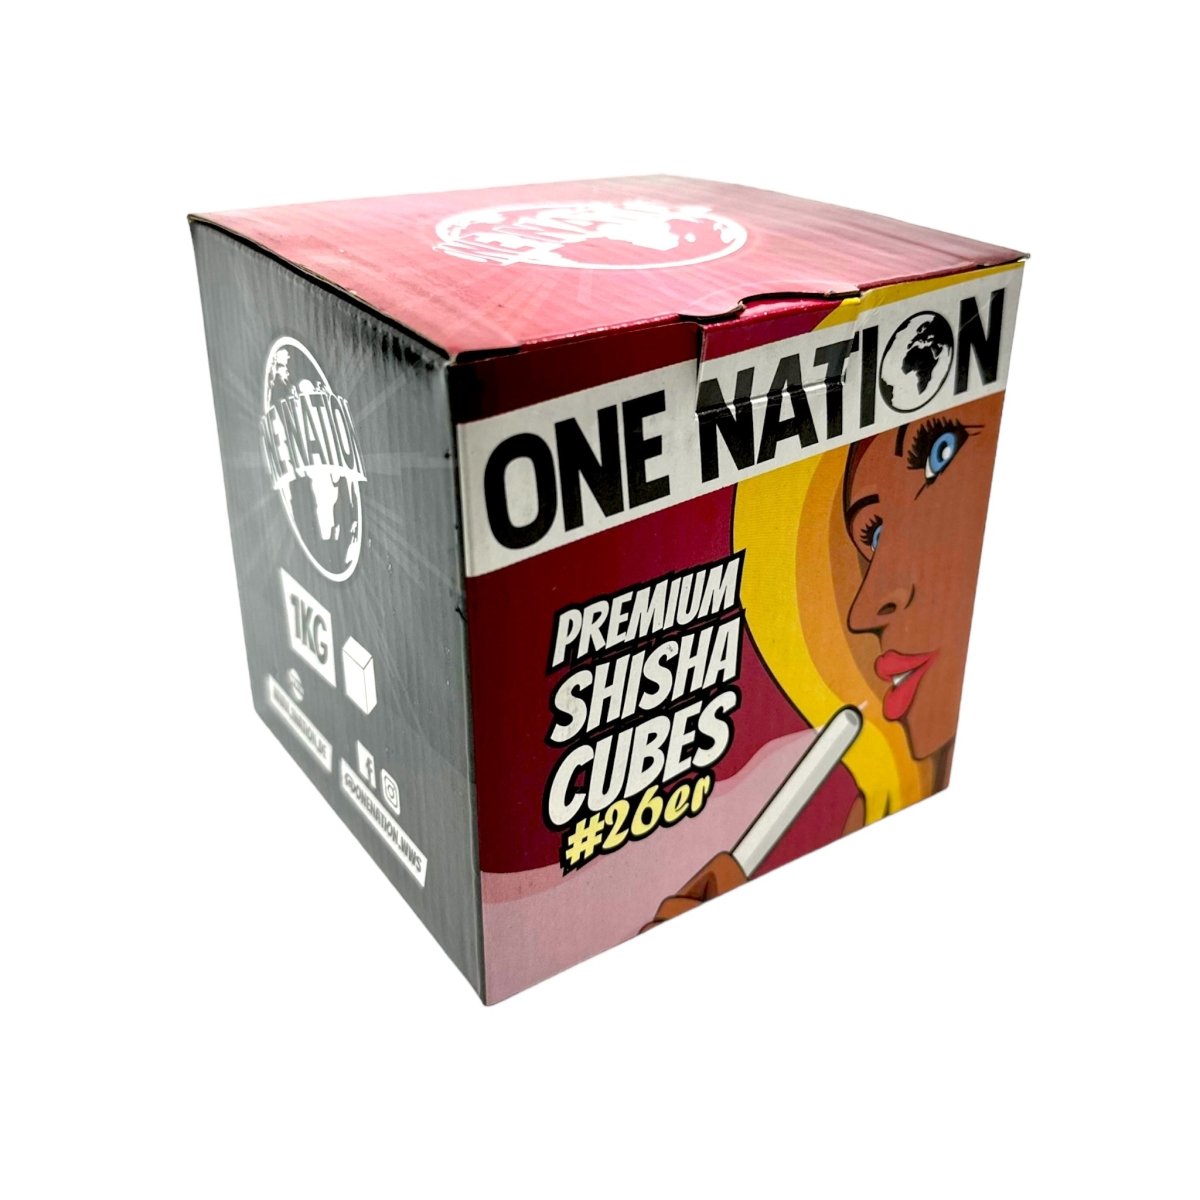 One Nation Premium Shisha Cubes #26 Kul